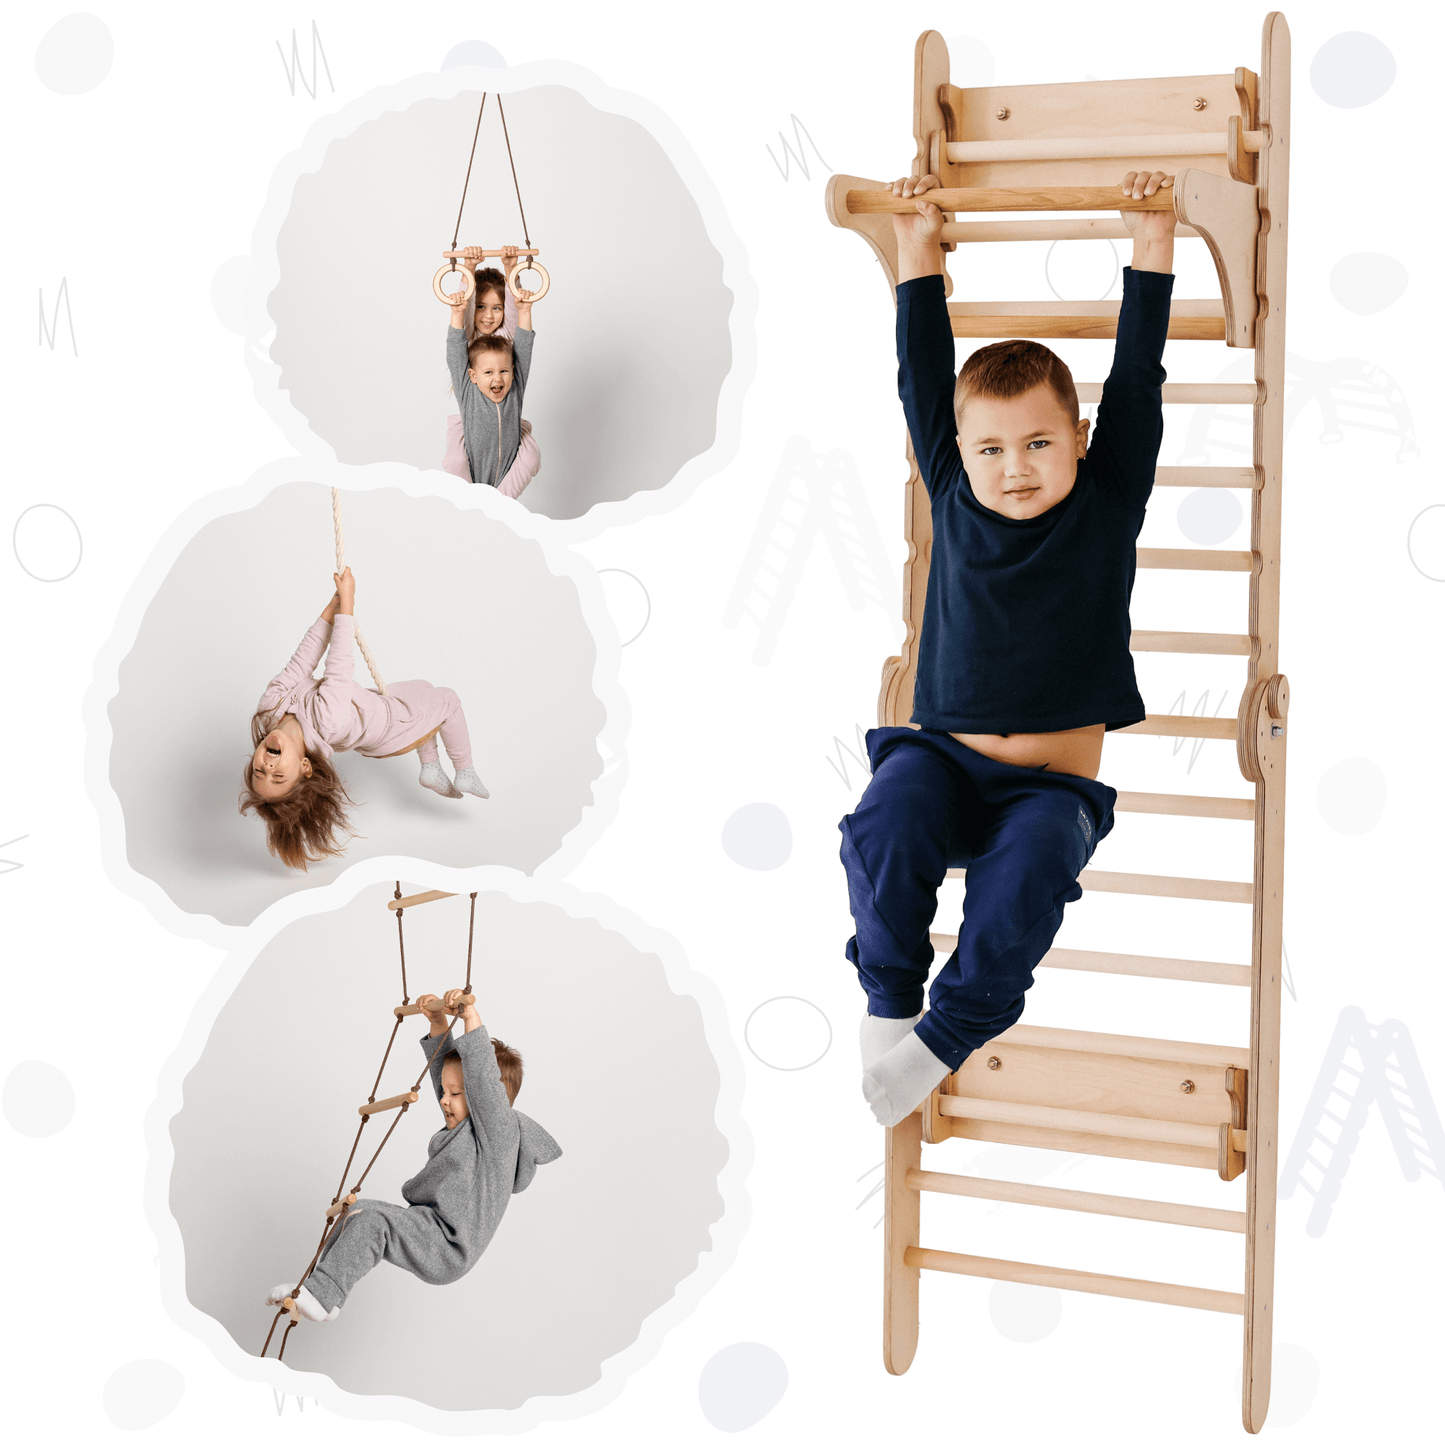 Swedish Wall / Wooden Wall Bars For Children + Swing Set